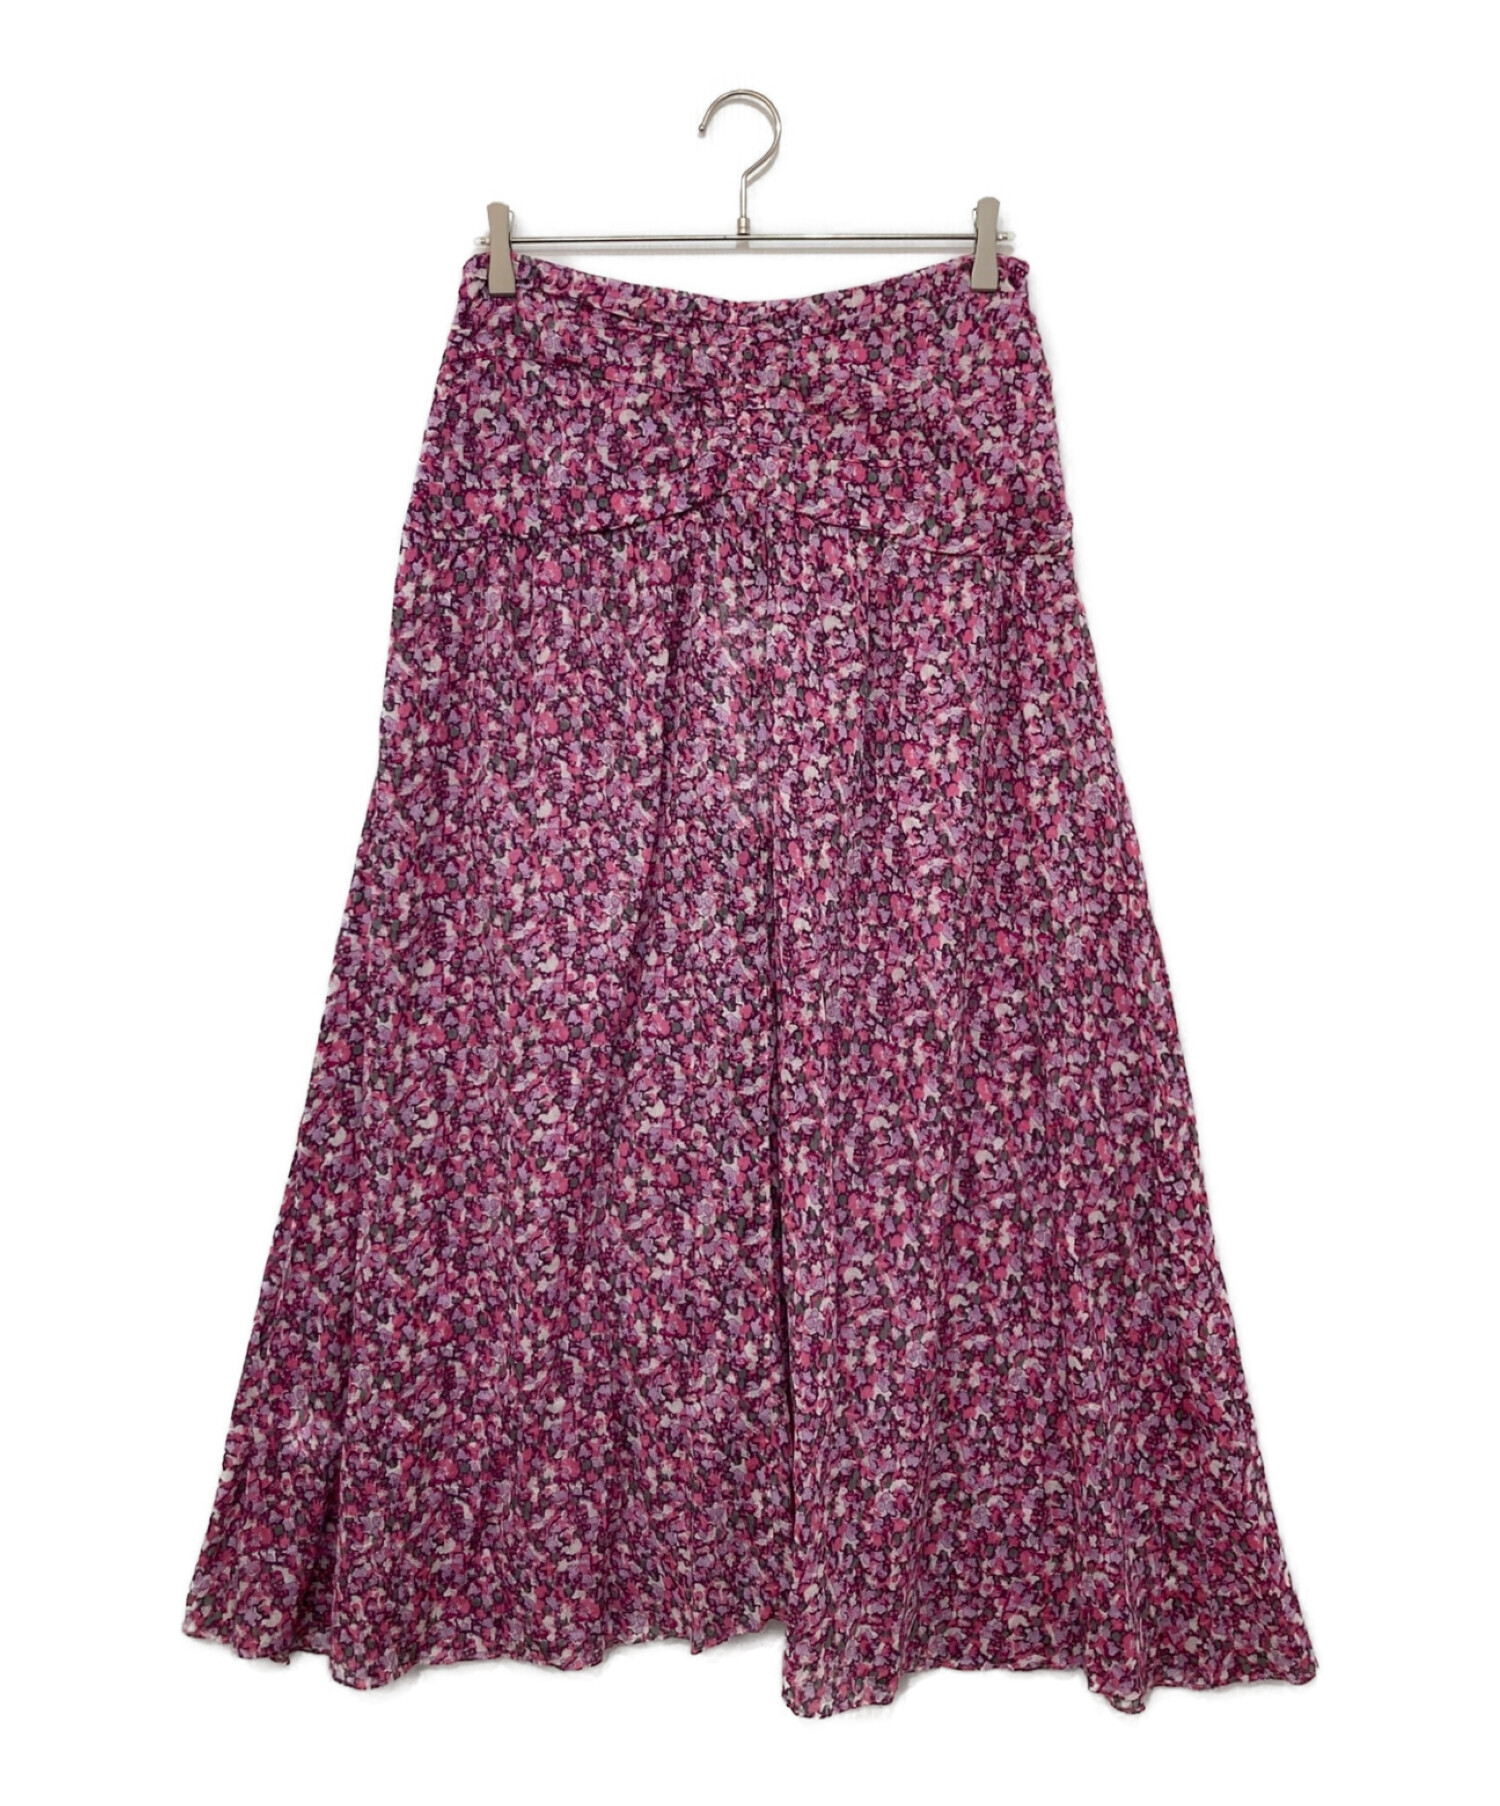 ISABEL MARANT ETOILE (イザベルマランエトワール) 花柄スカート ピンク サイズ:40 未使用品